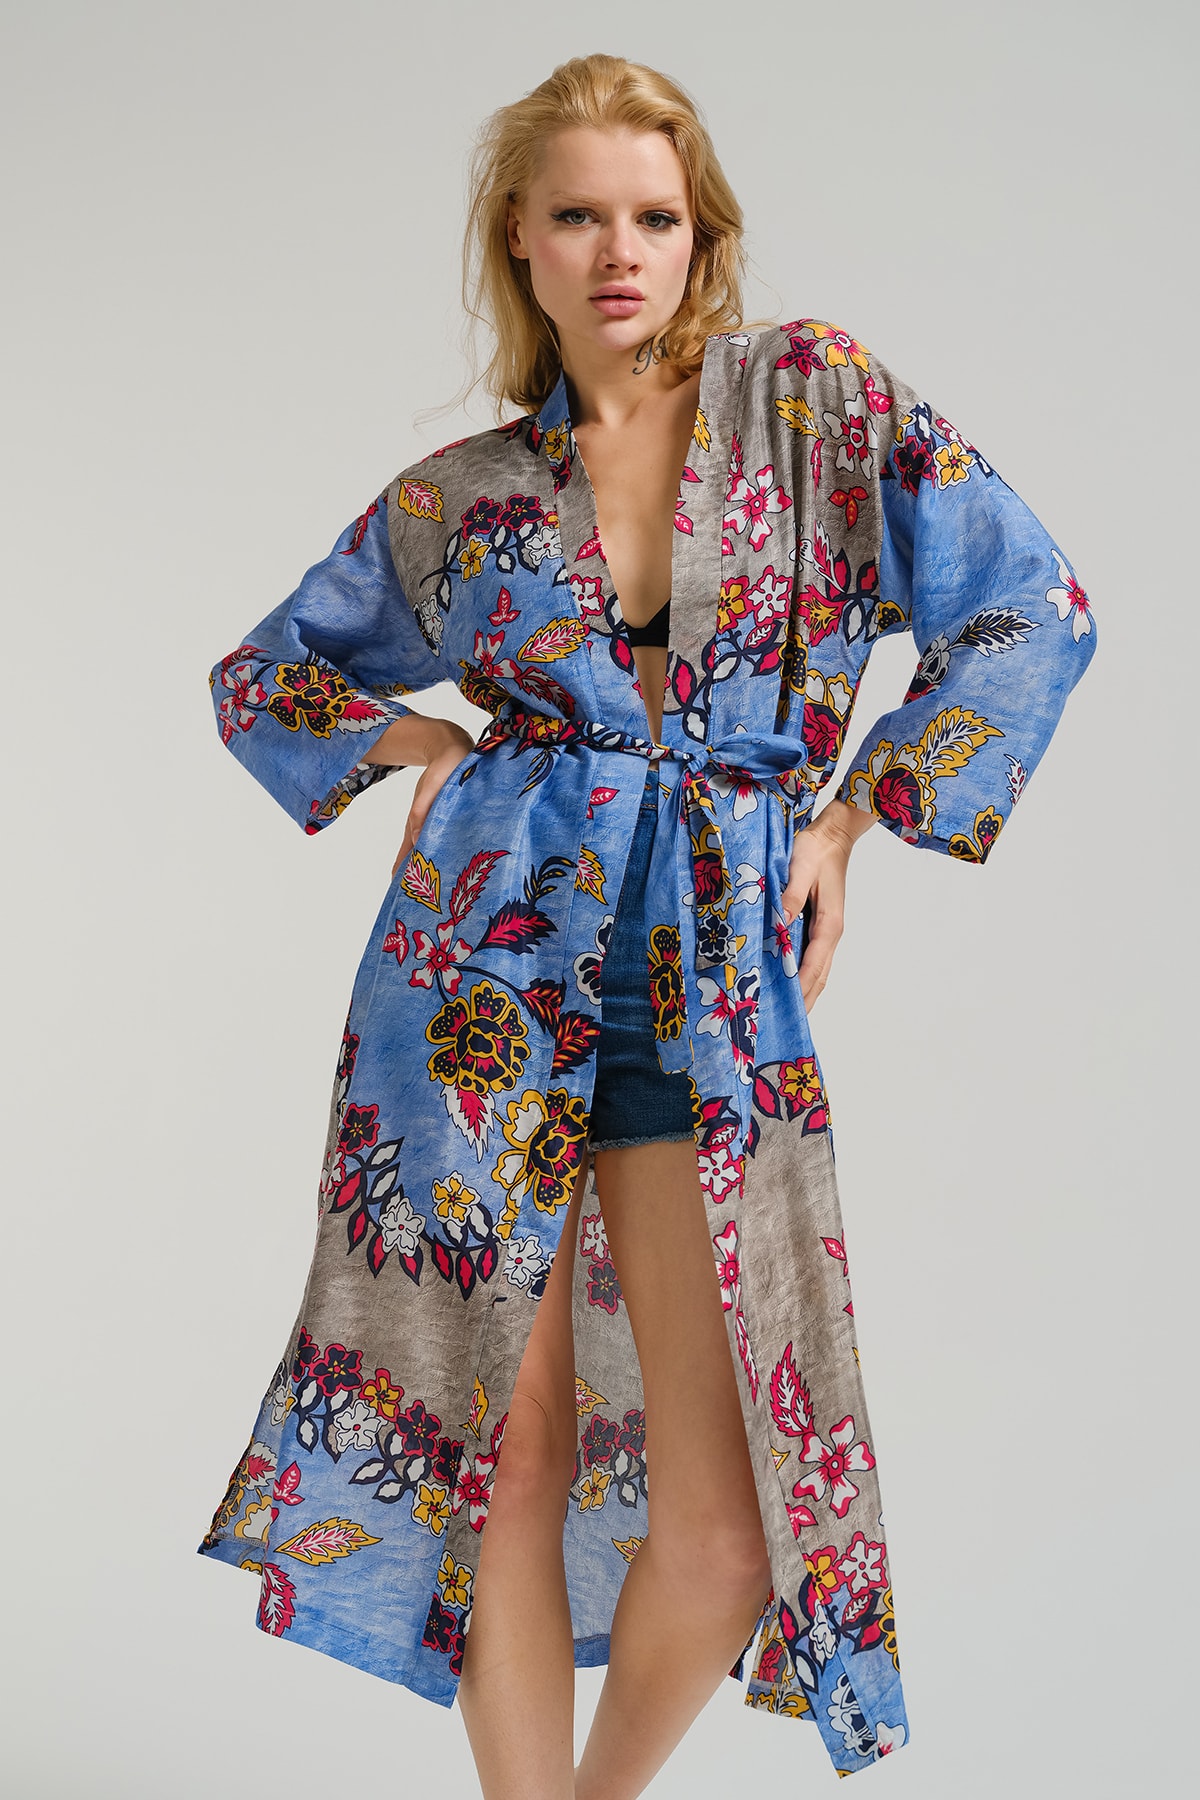 armonika Women's Blue Patterned Long Kimono